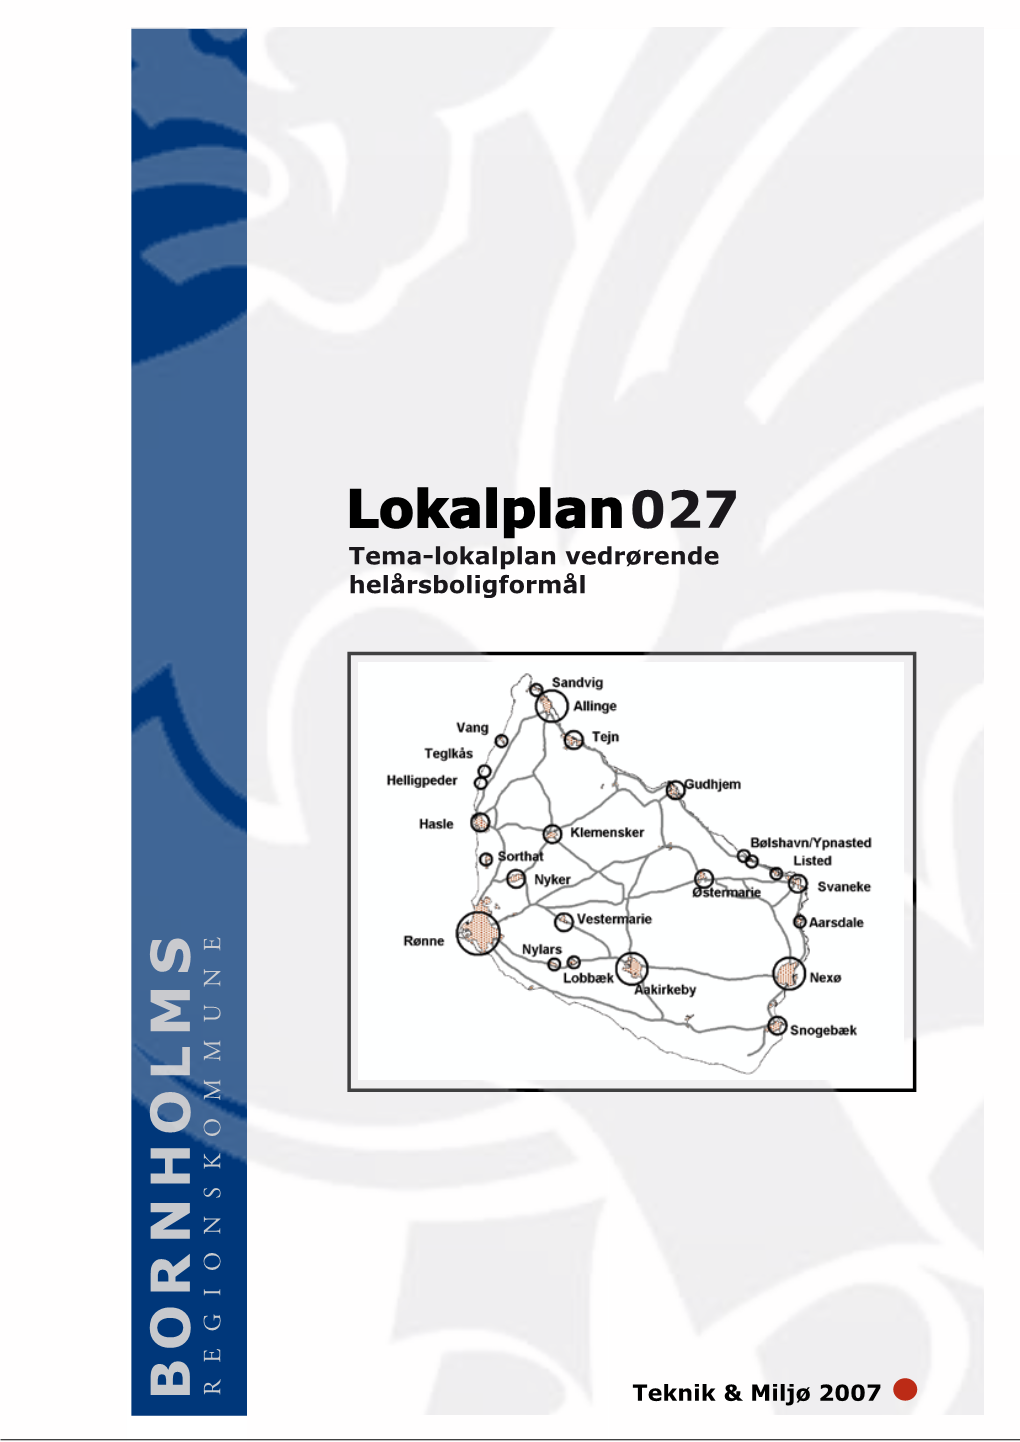 Lokalplan027 Tema-Lokalplan Vedrørende Helårsboligformål